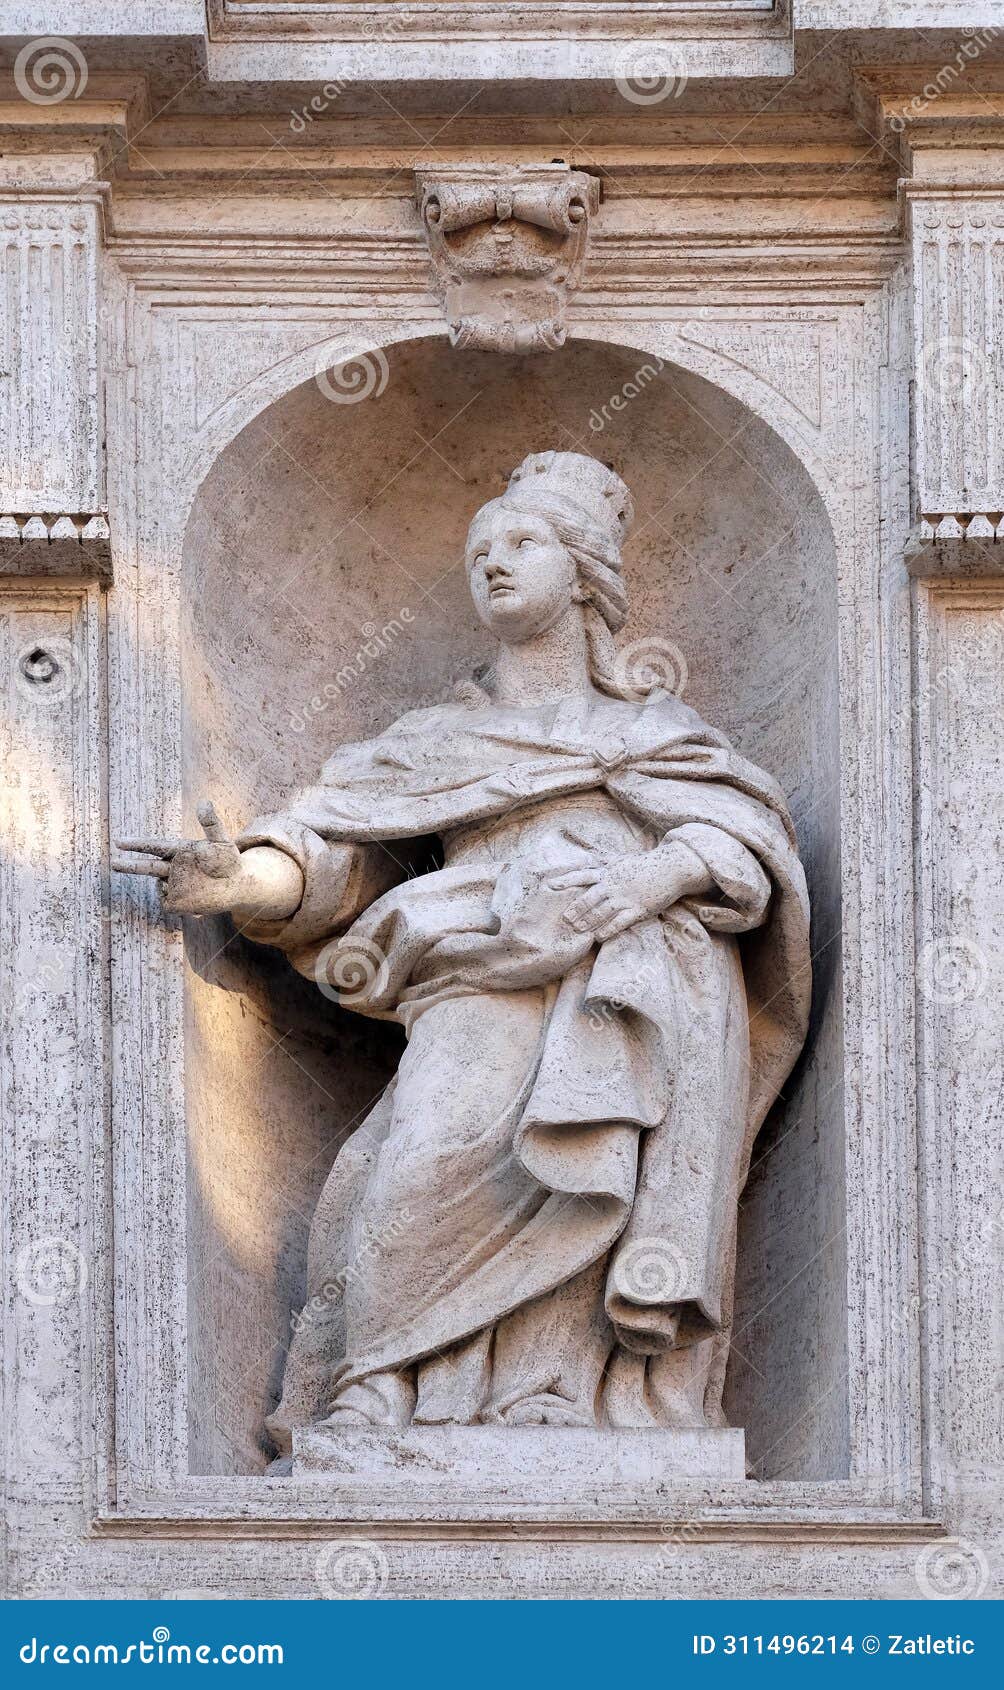 st jeanne de valois statue on the facade of chiesa di san luigi dei francesi - church of st louis of the french, rome, italy